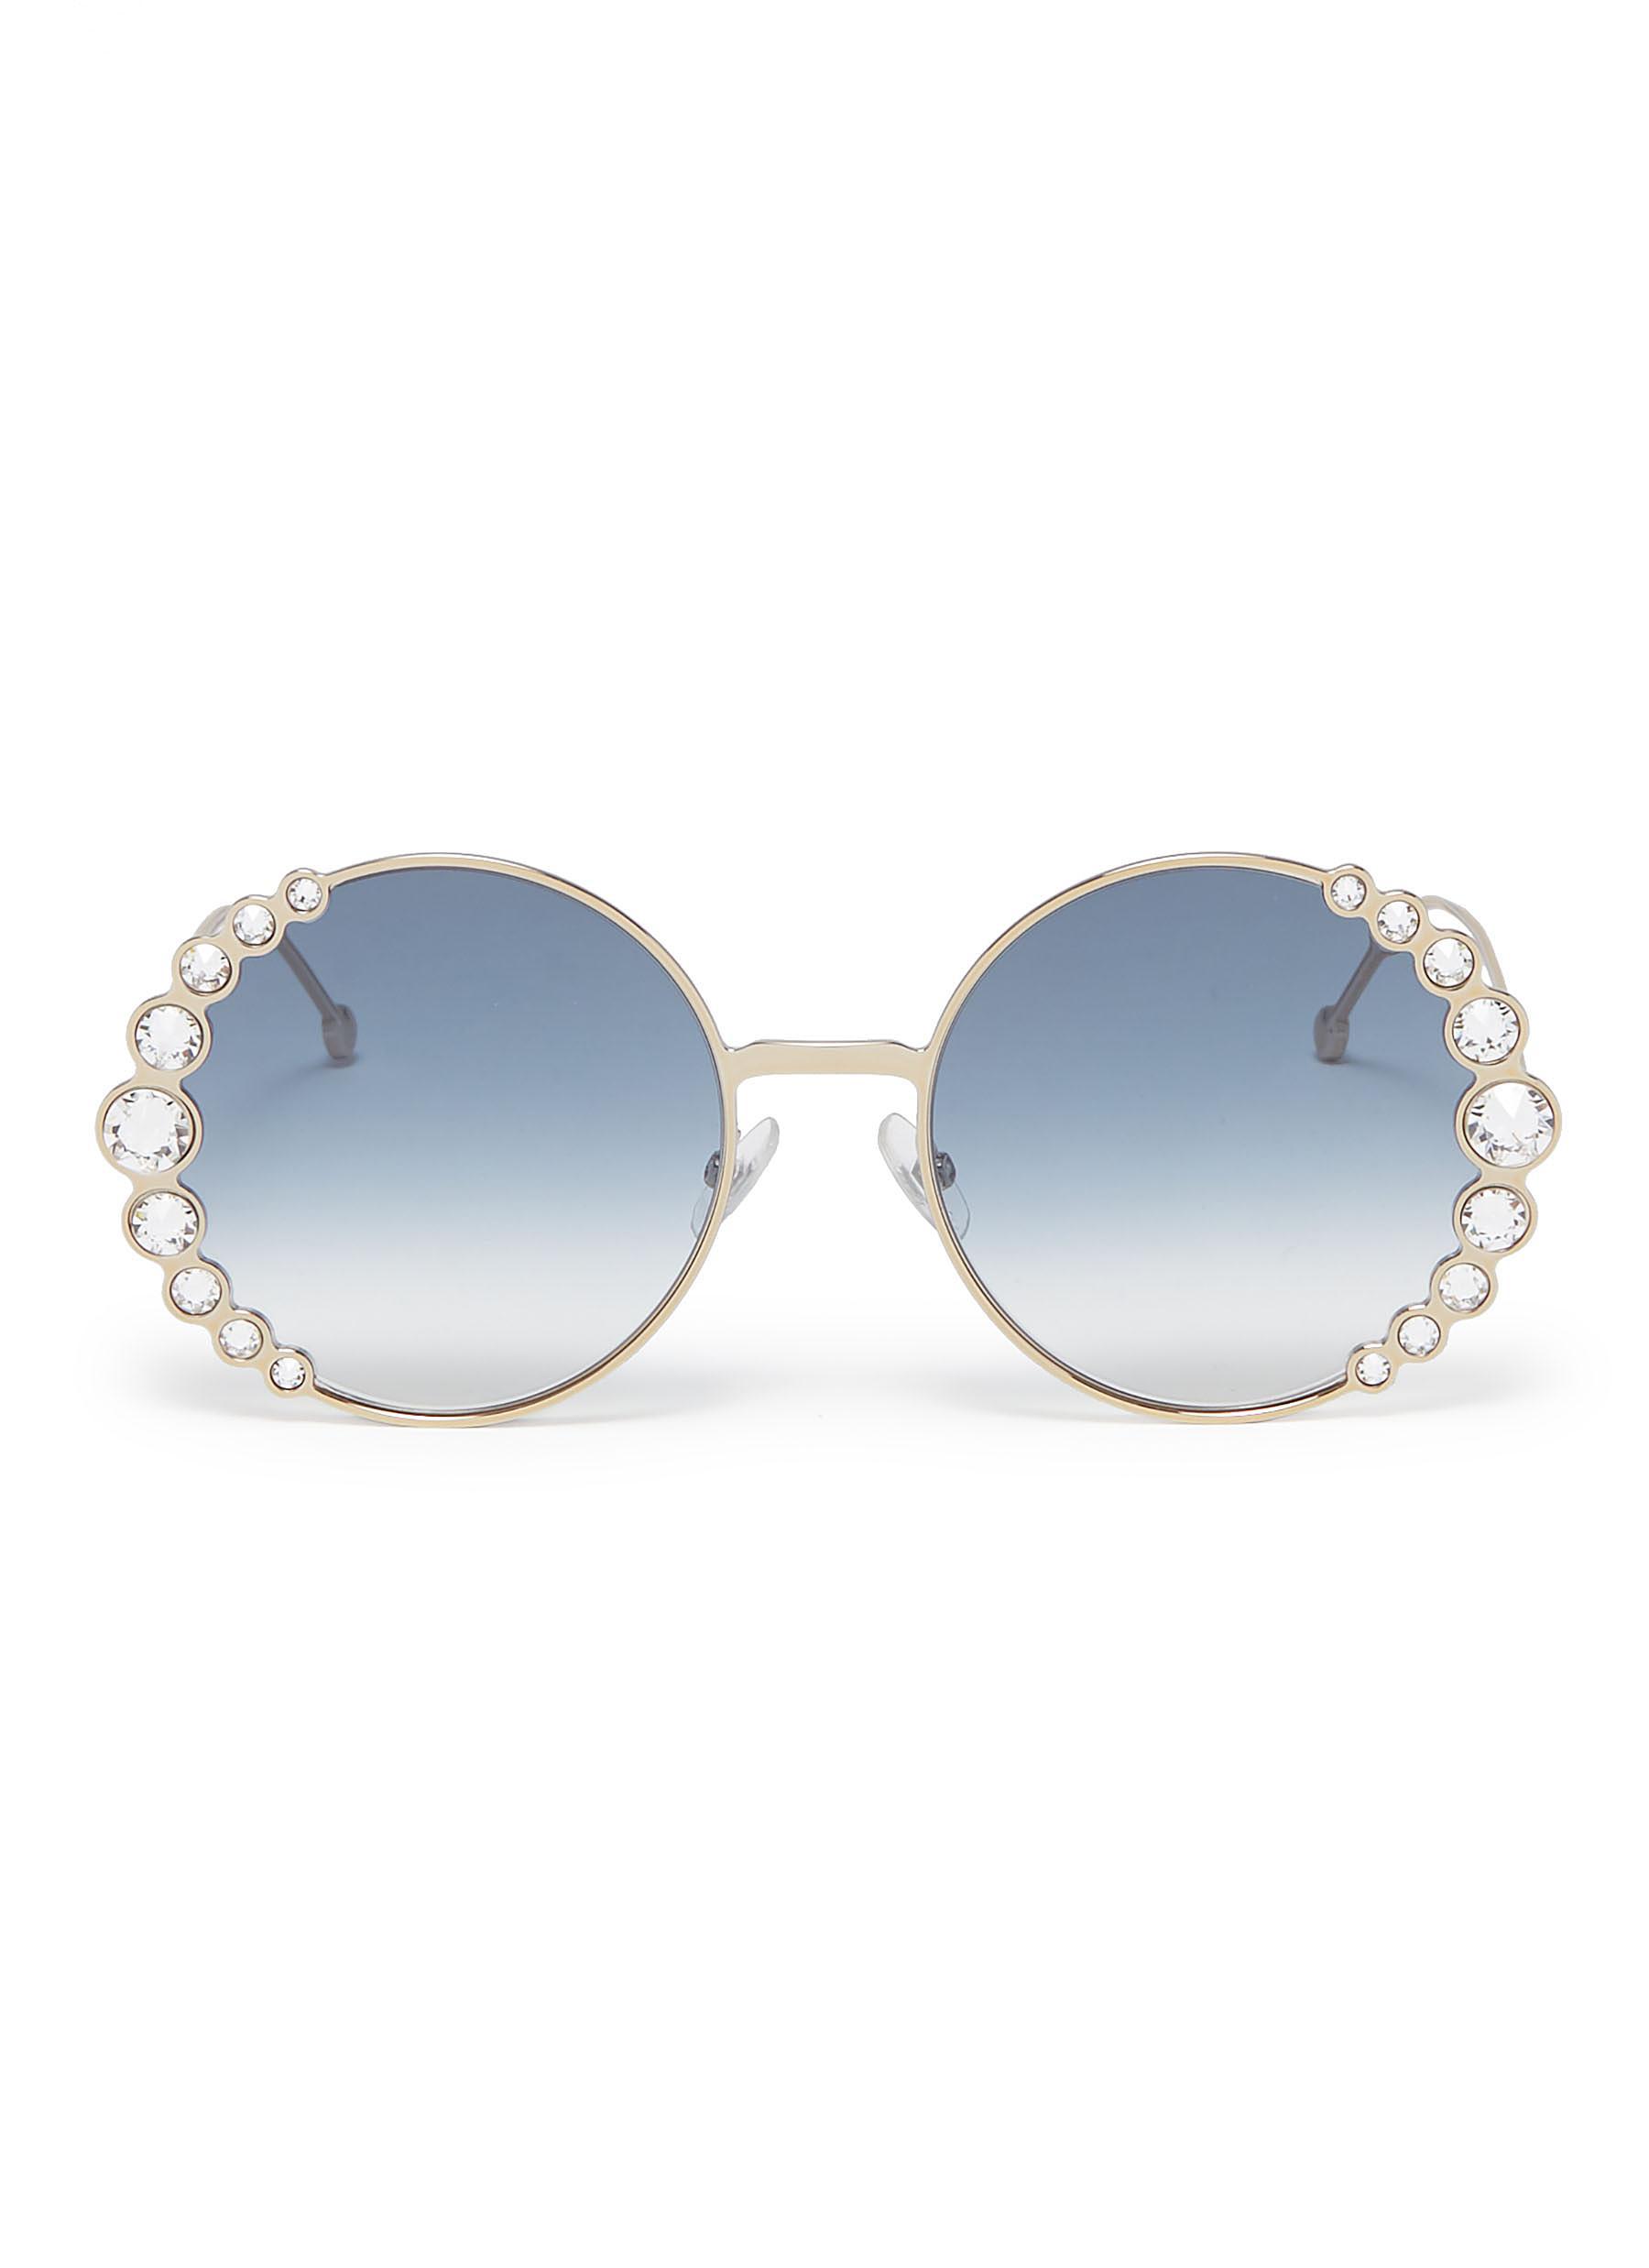 fendi sunglasses with swarovski crystals